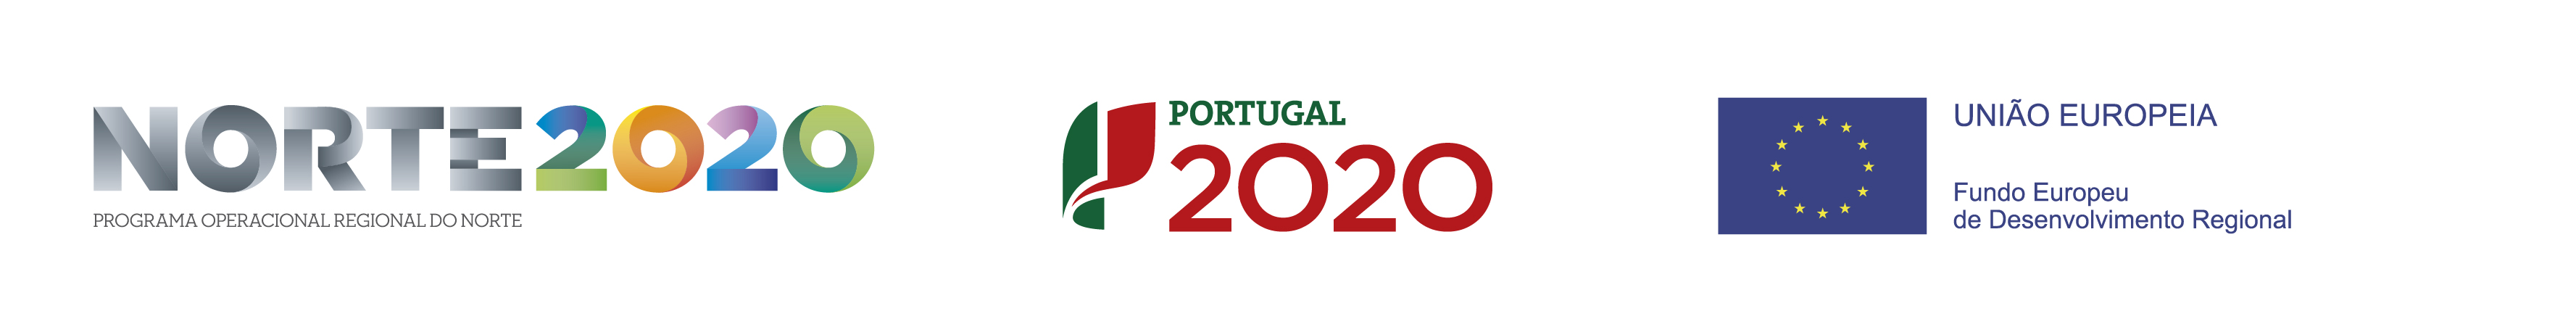 Barra Norte2020 Portugal 2020 